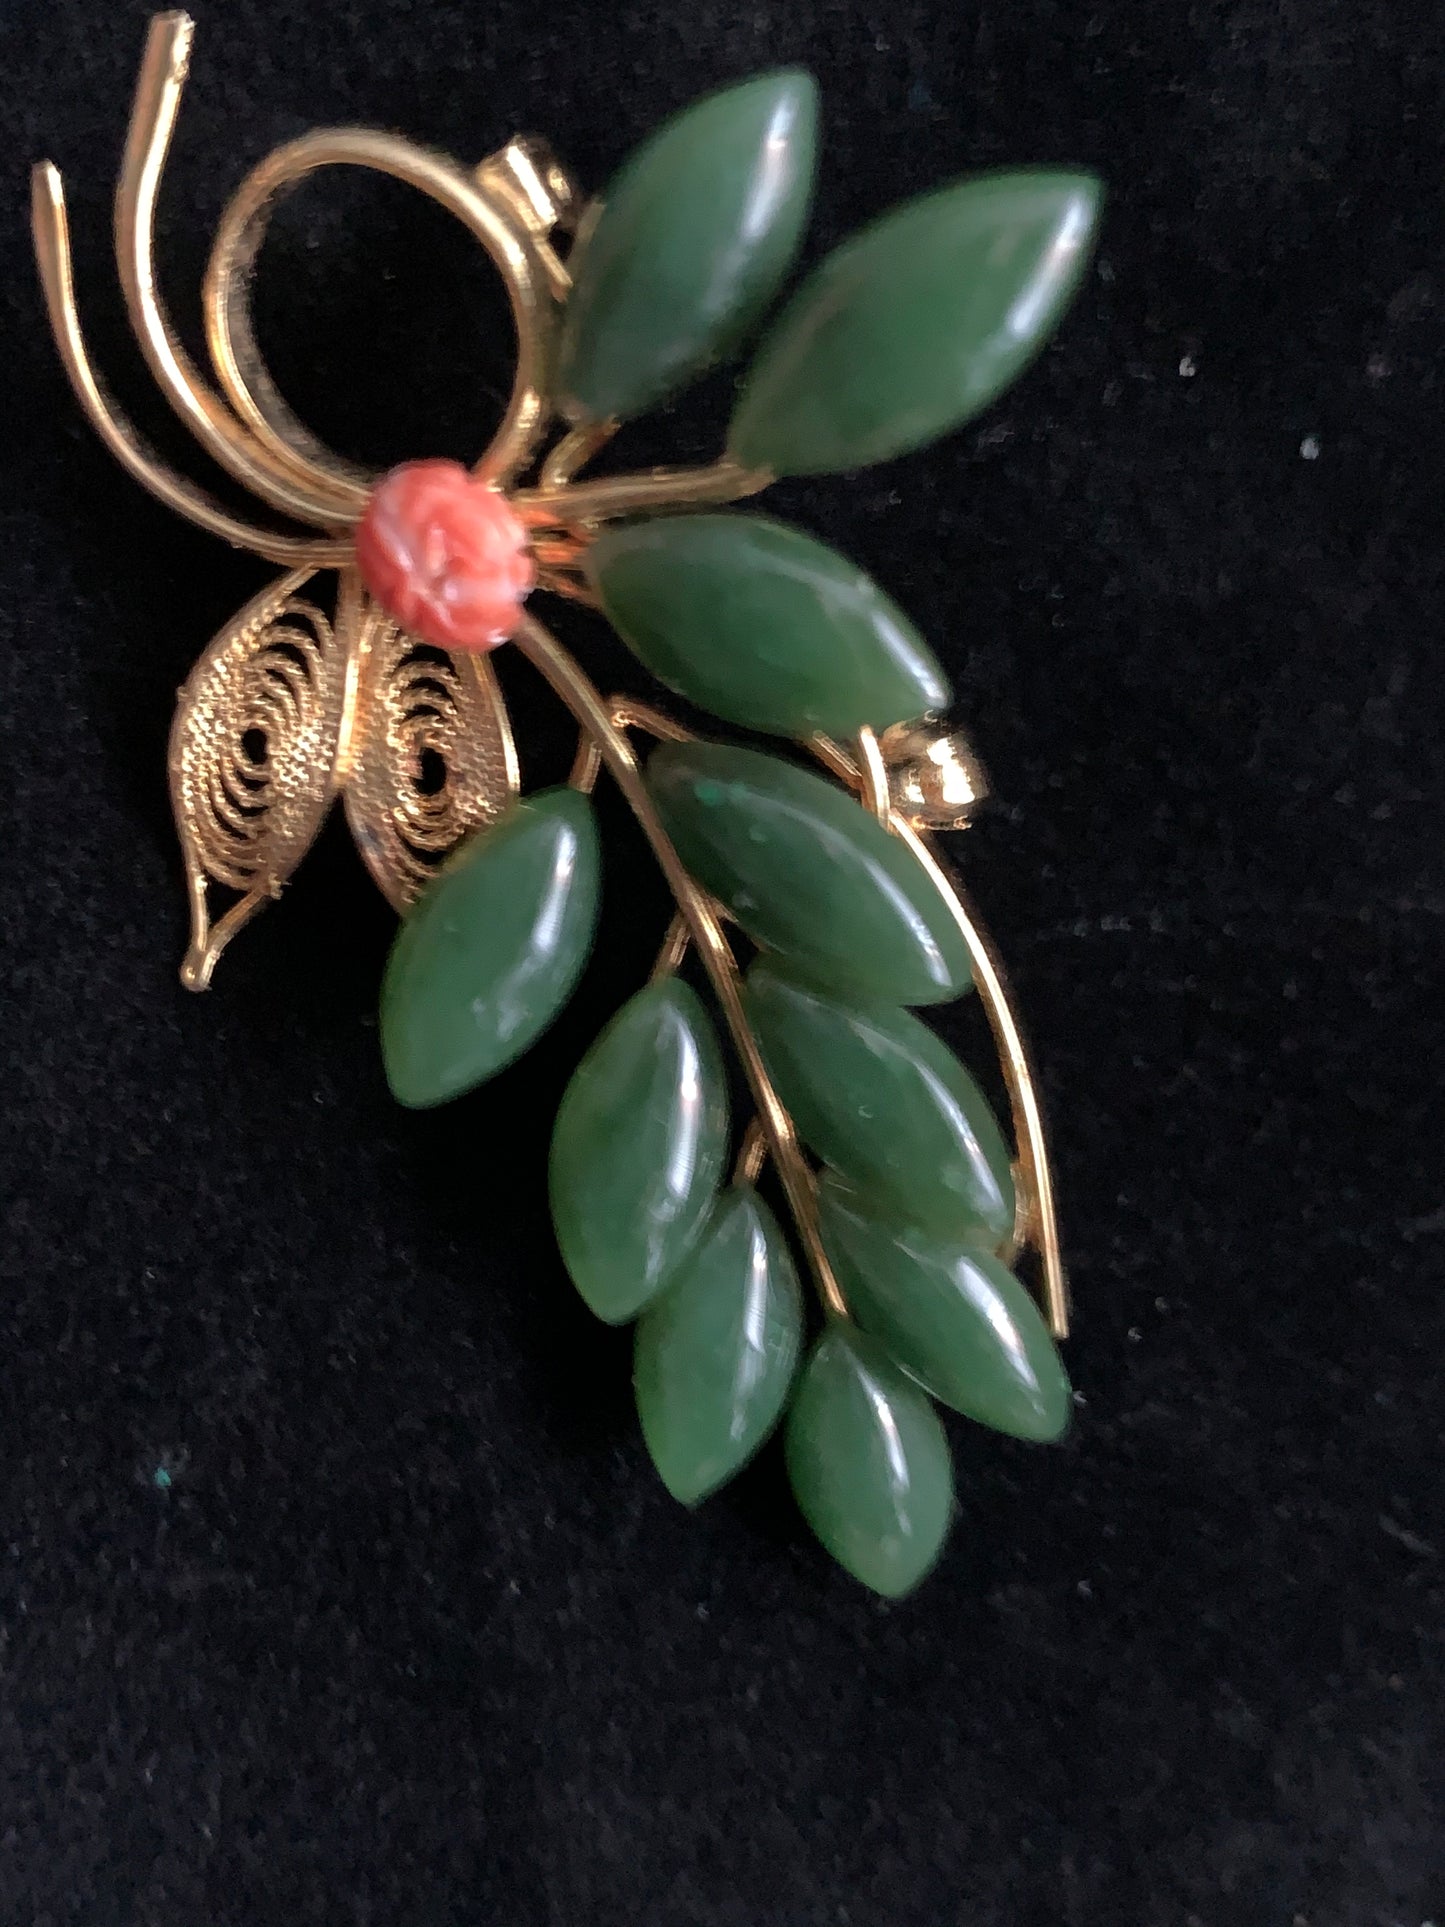 A jade and coral brooch